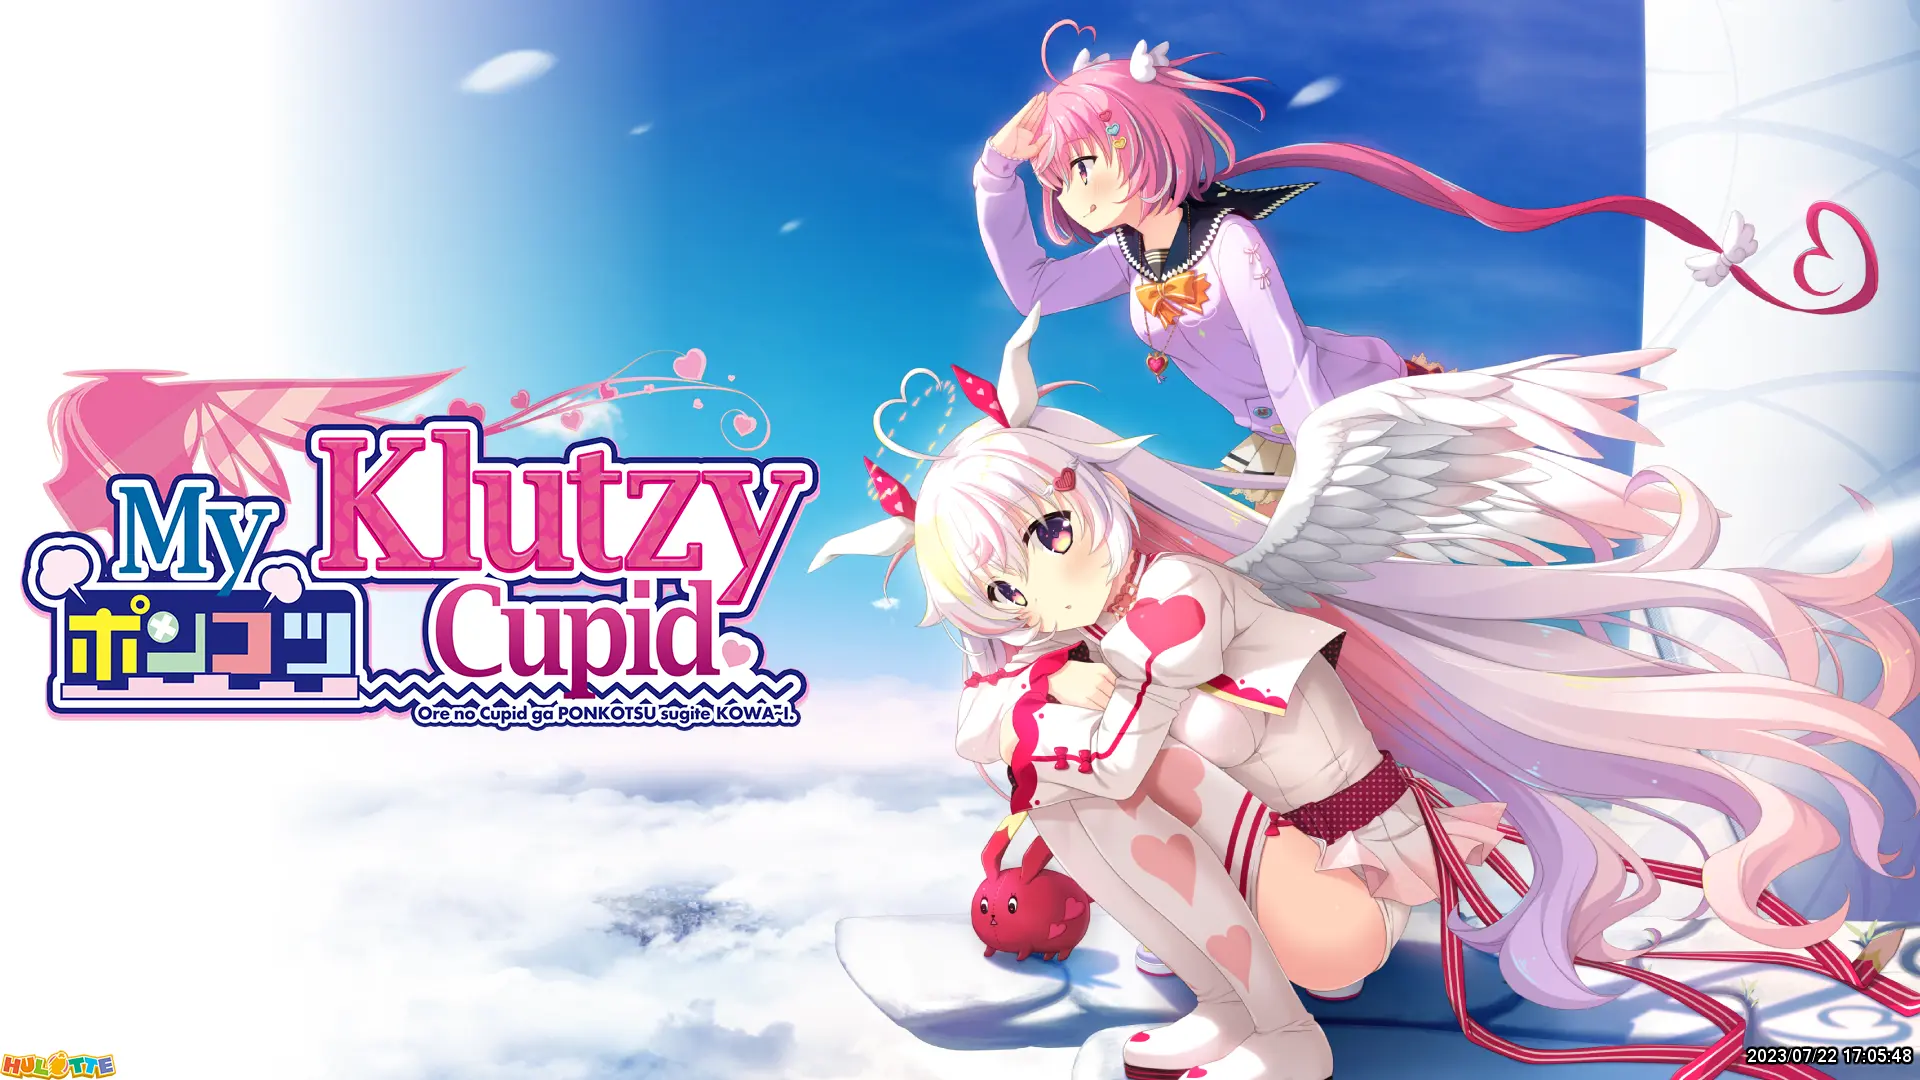 My Klutzy Cupid main image